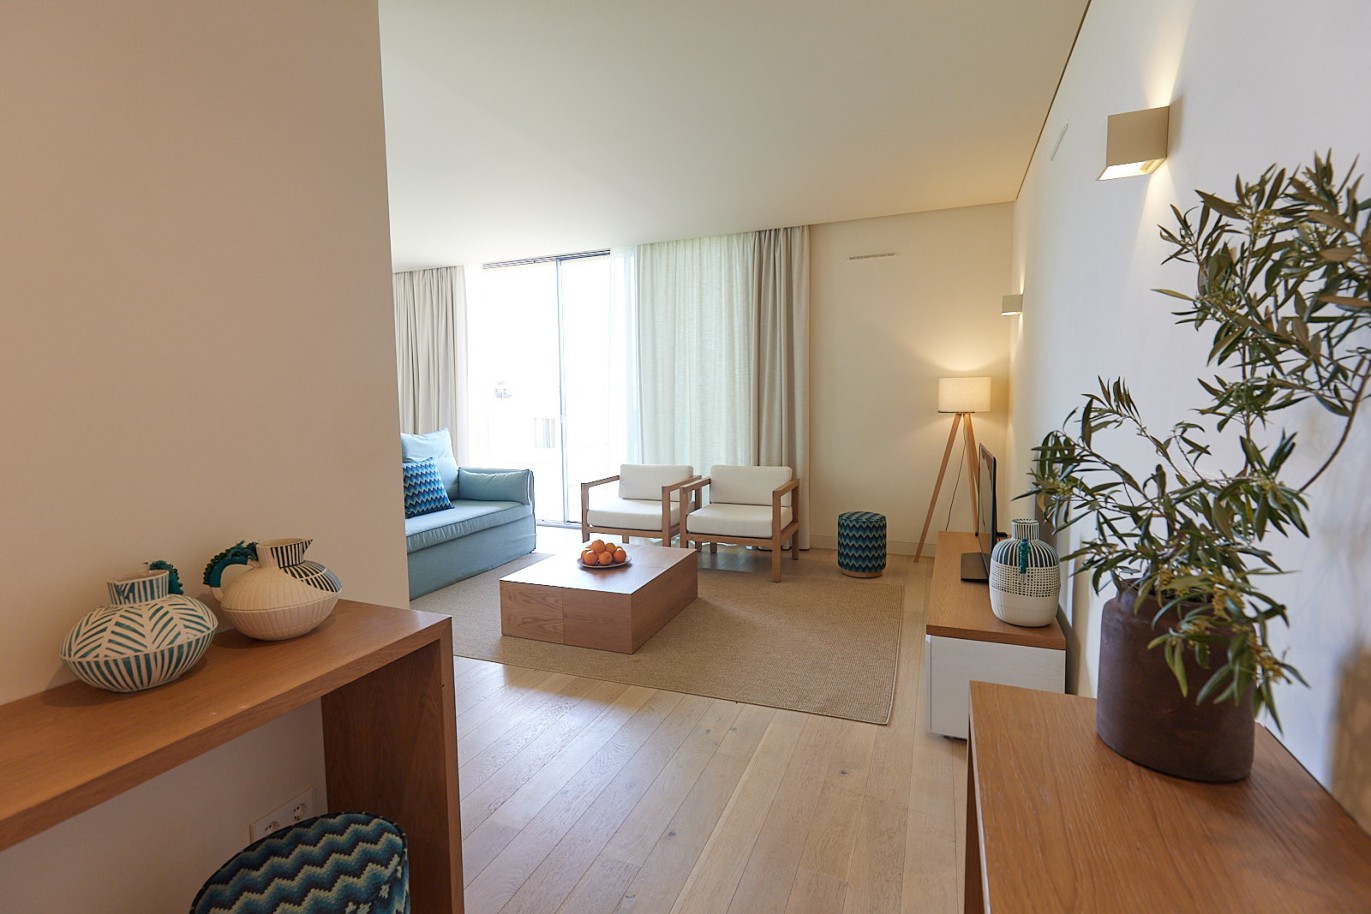 2 bedroom apartment in resort, for sale in Porches, Algarve_230778